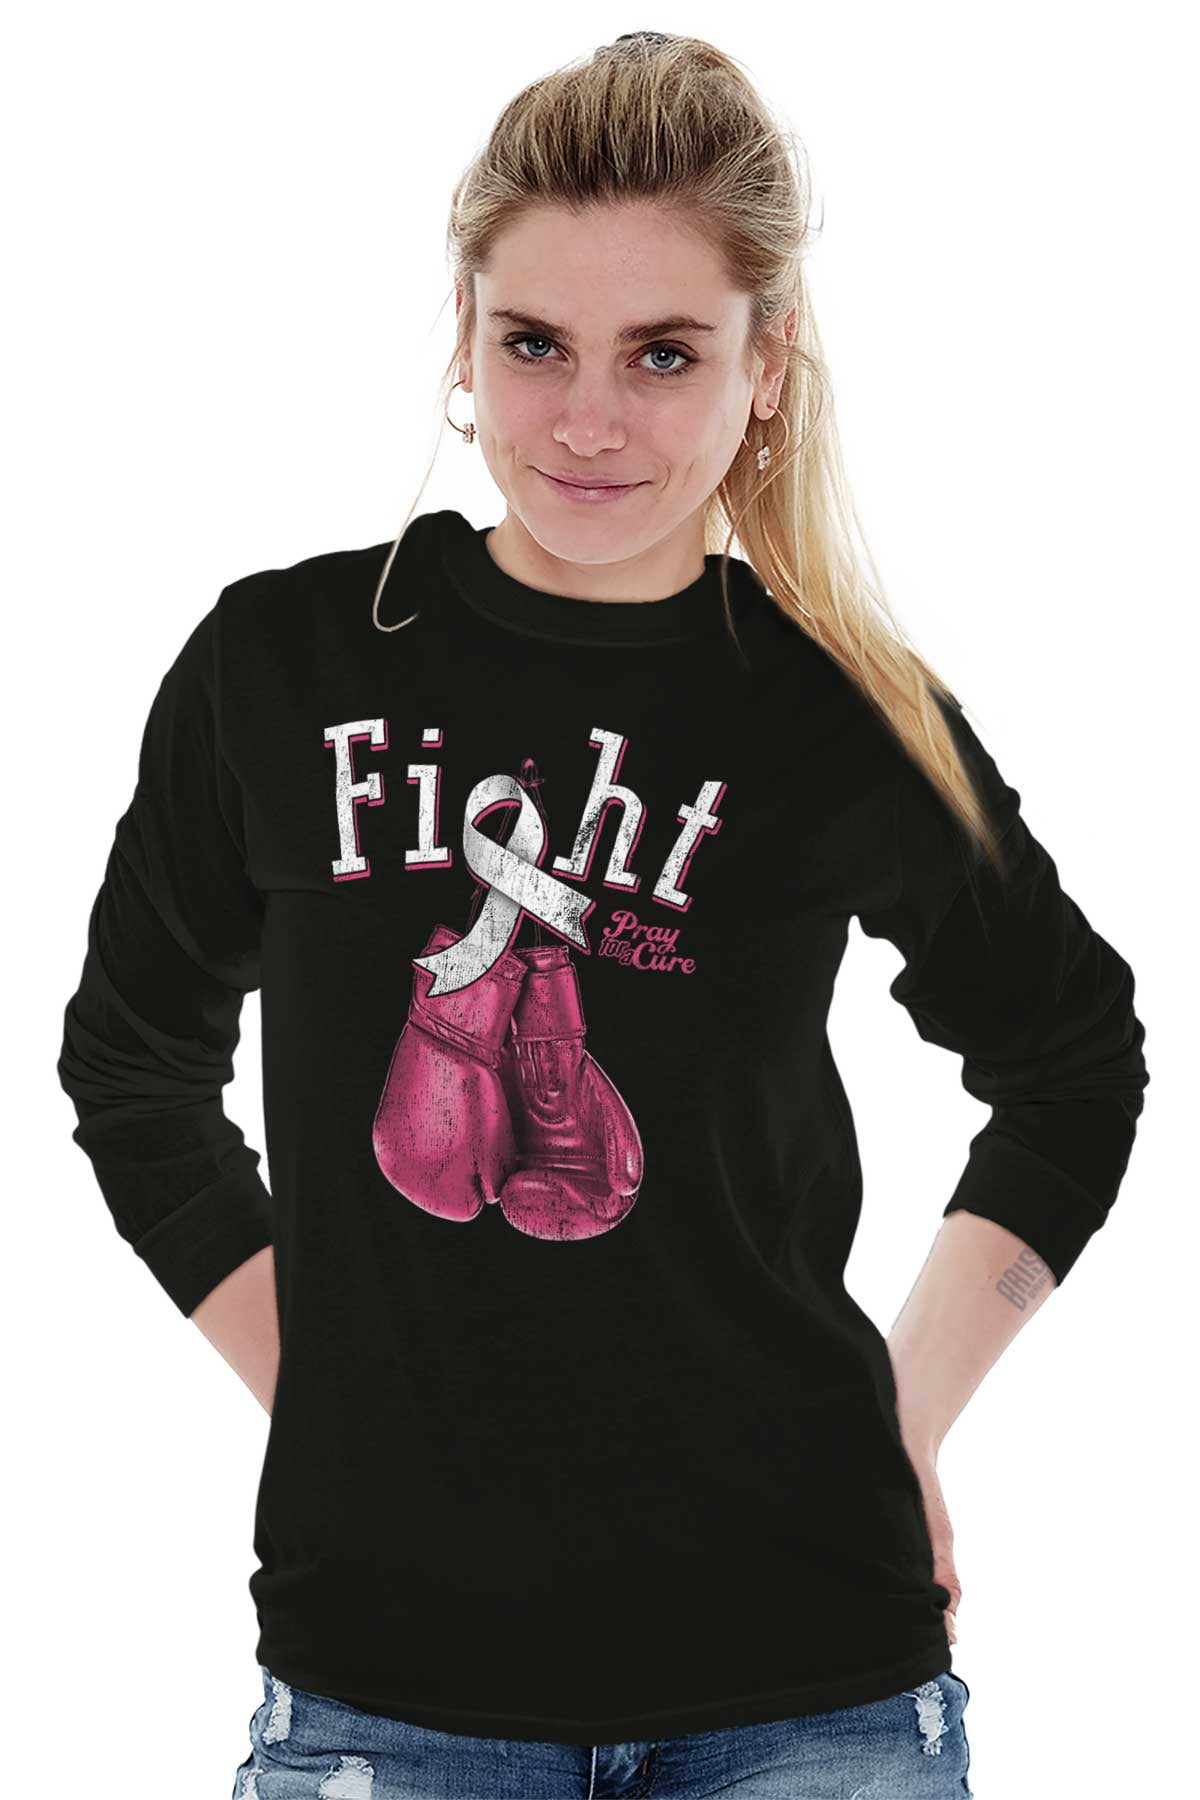 boxing t shirts for women